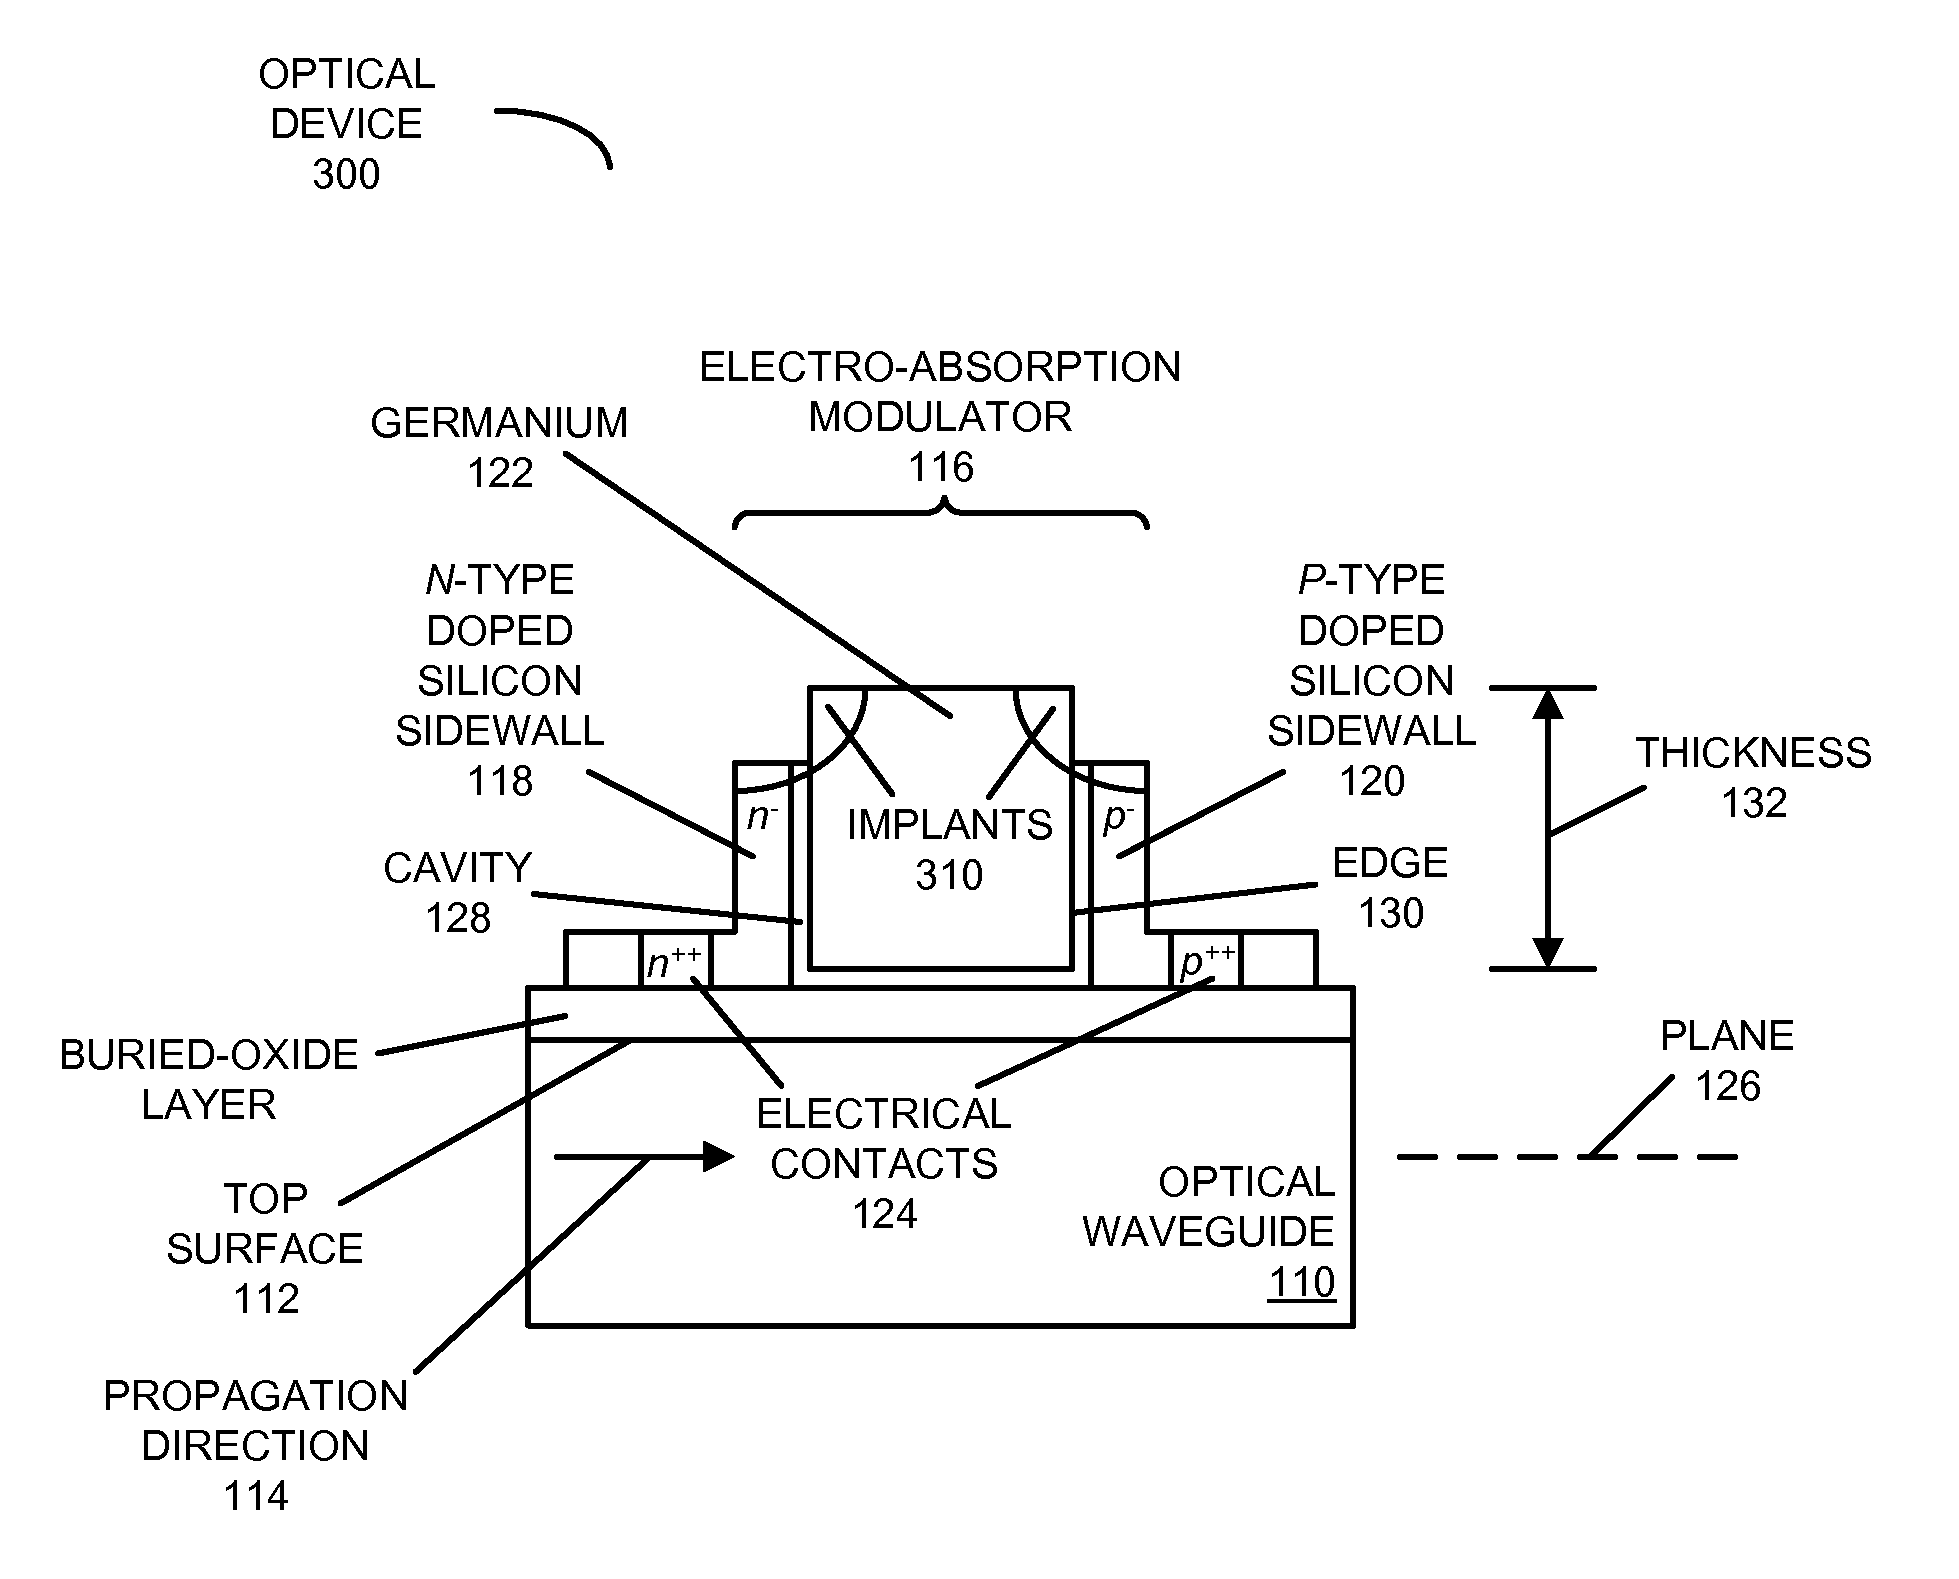 Integrated electro-absorption modulator